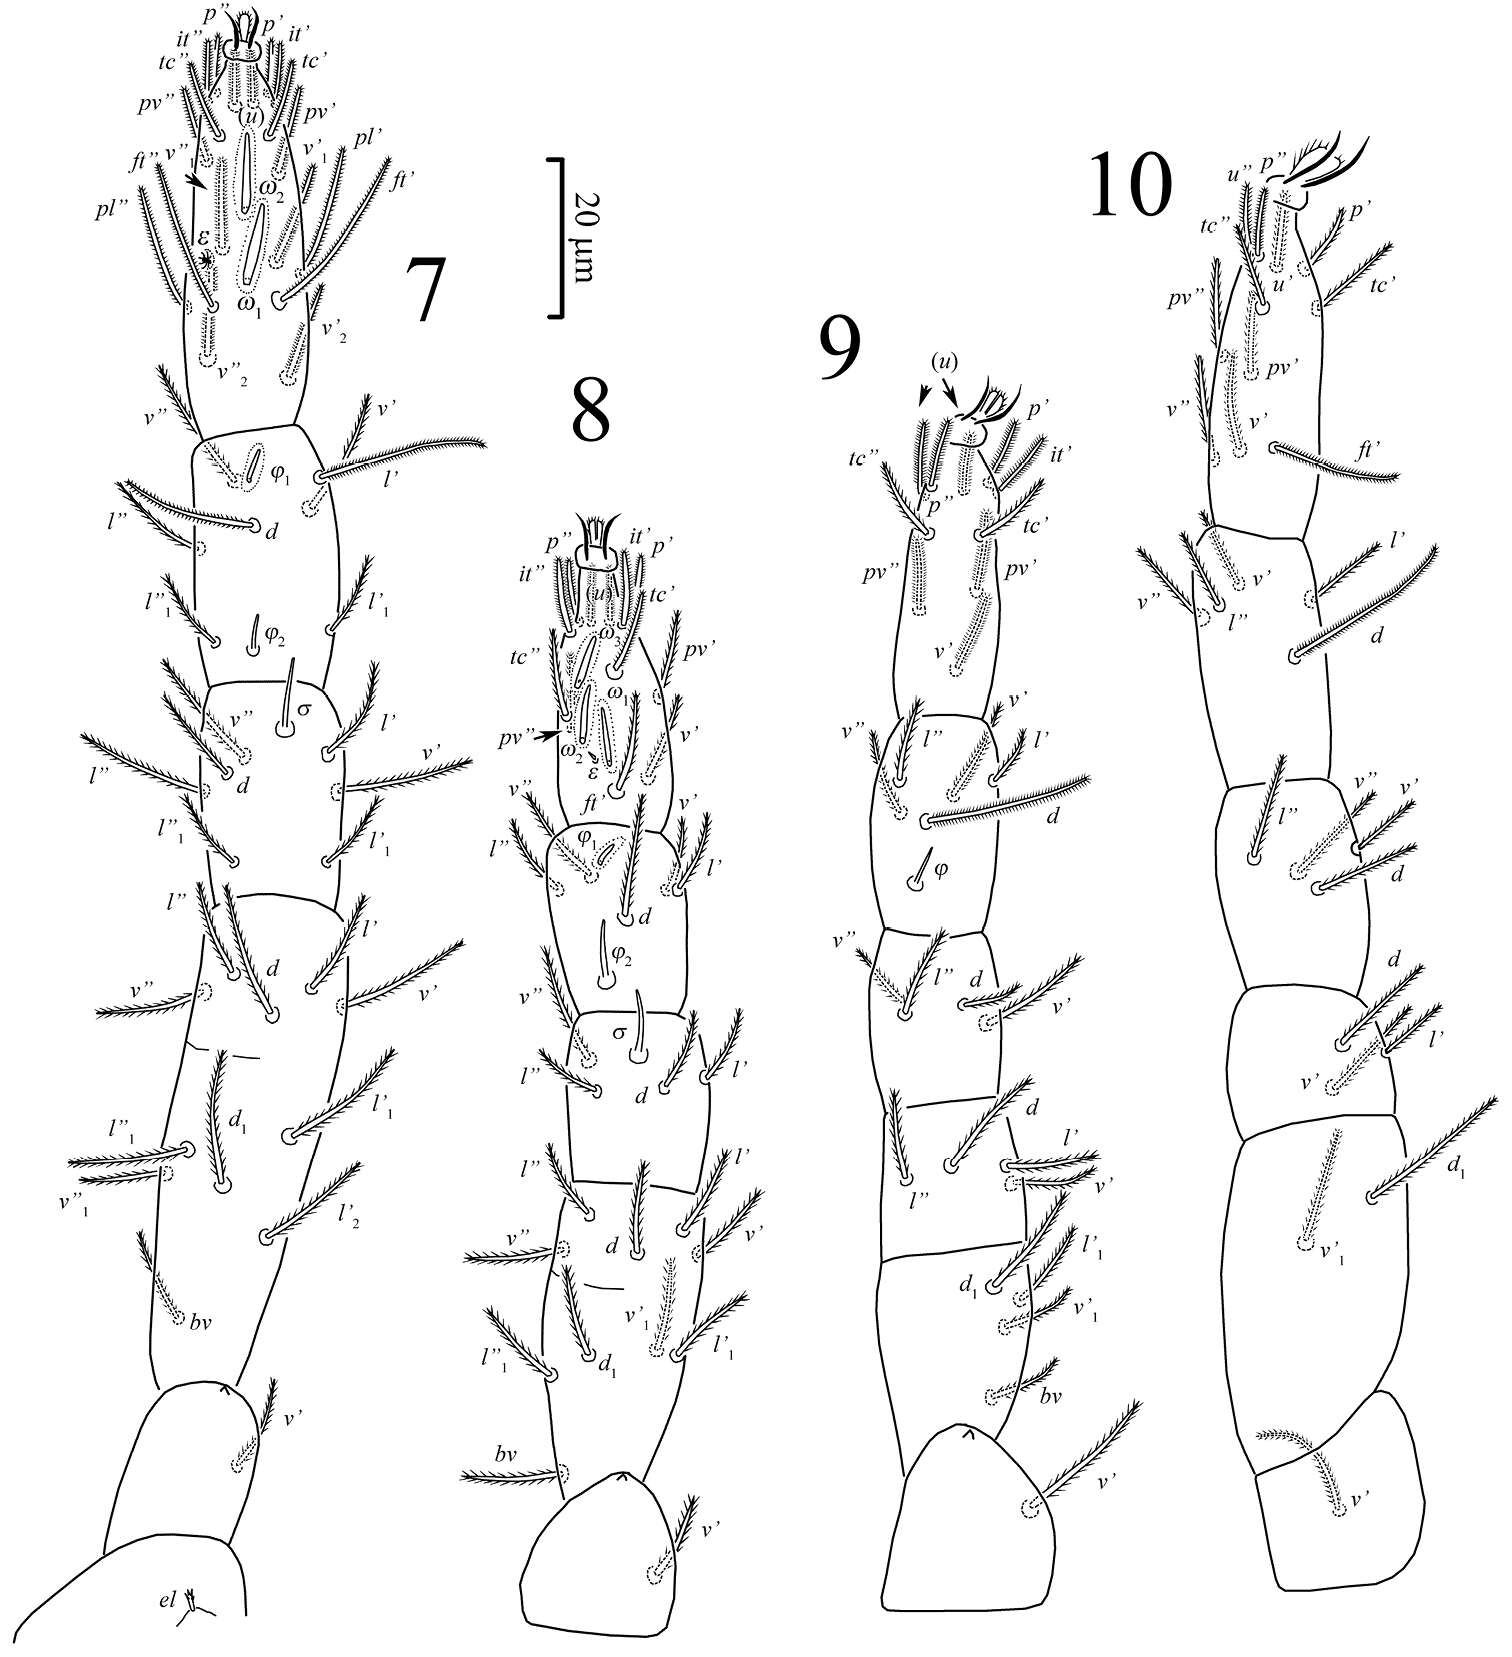 Image of Pseudoeupodes porosus Khaustov